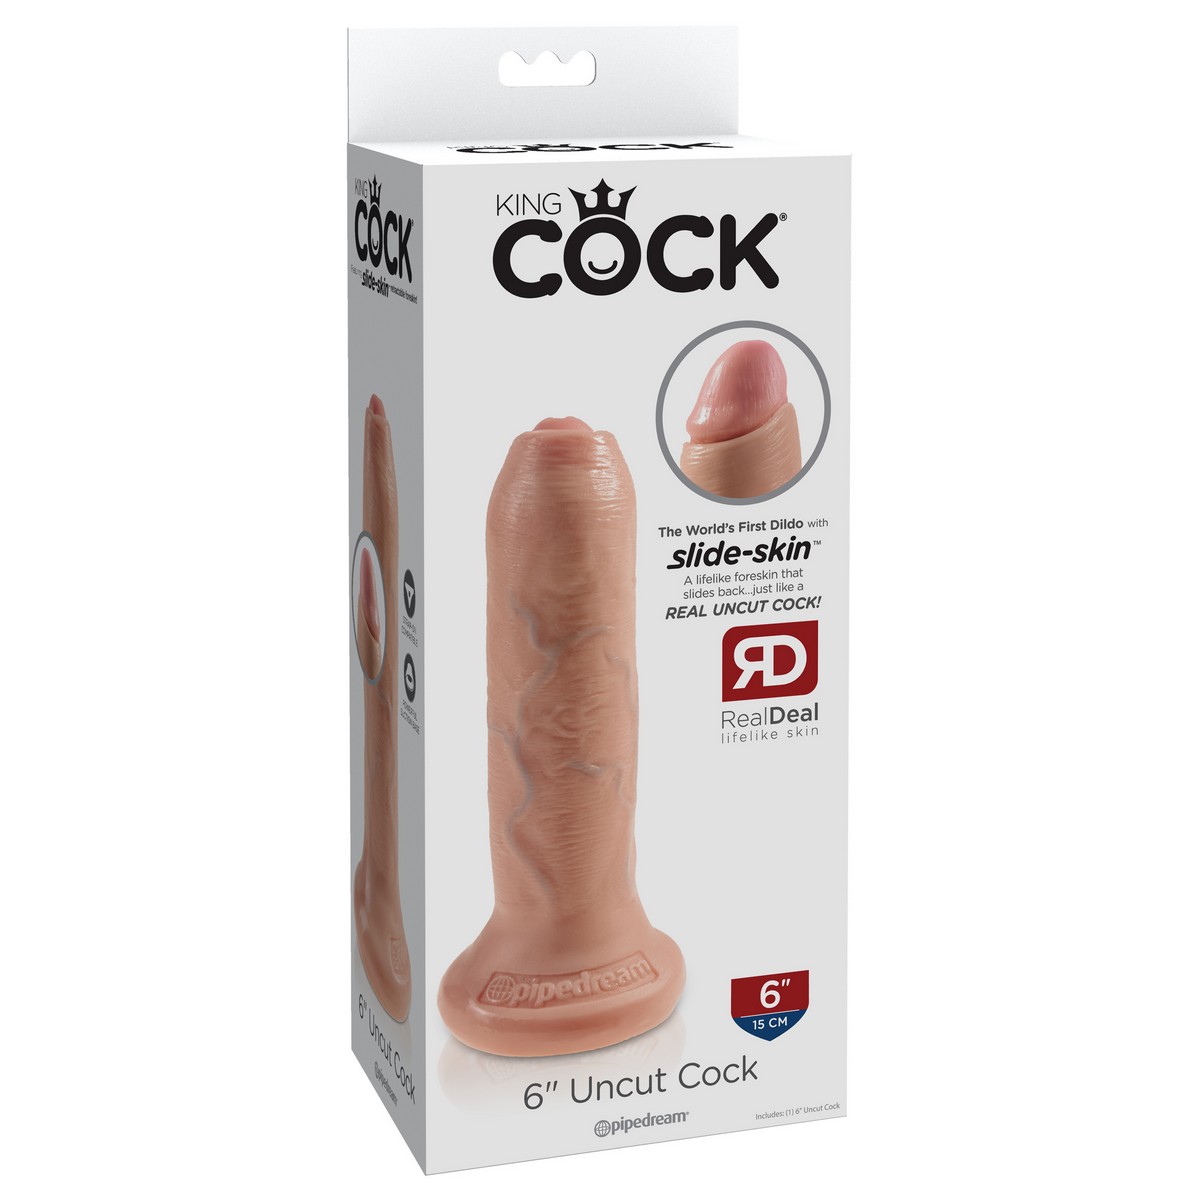     King Cock 6 Uncut Cock